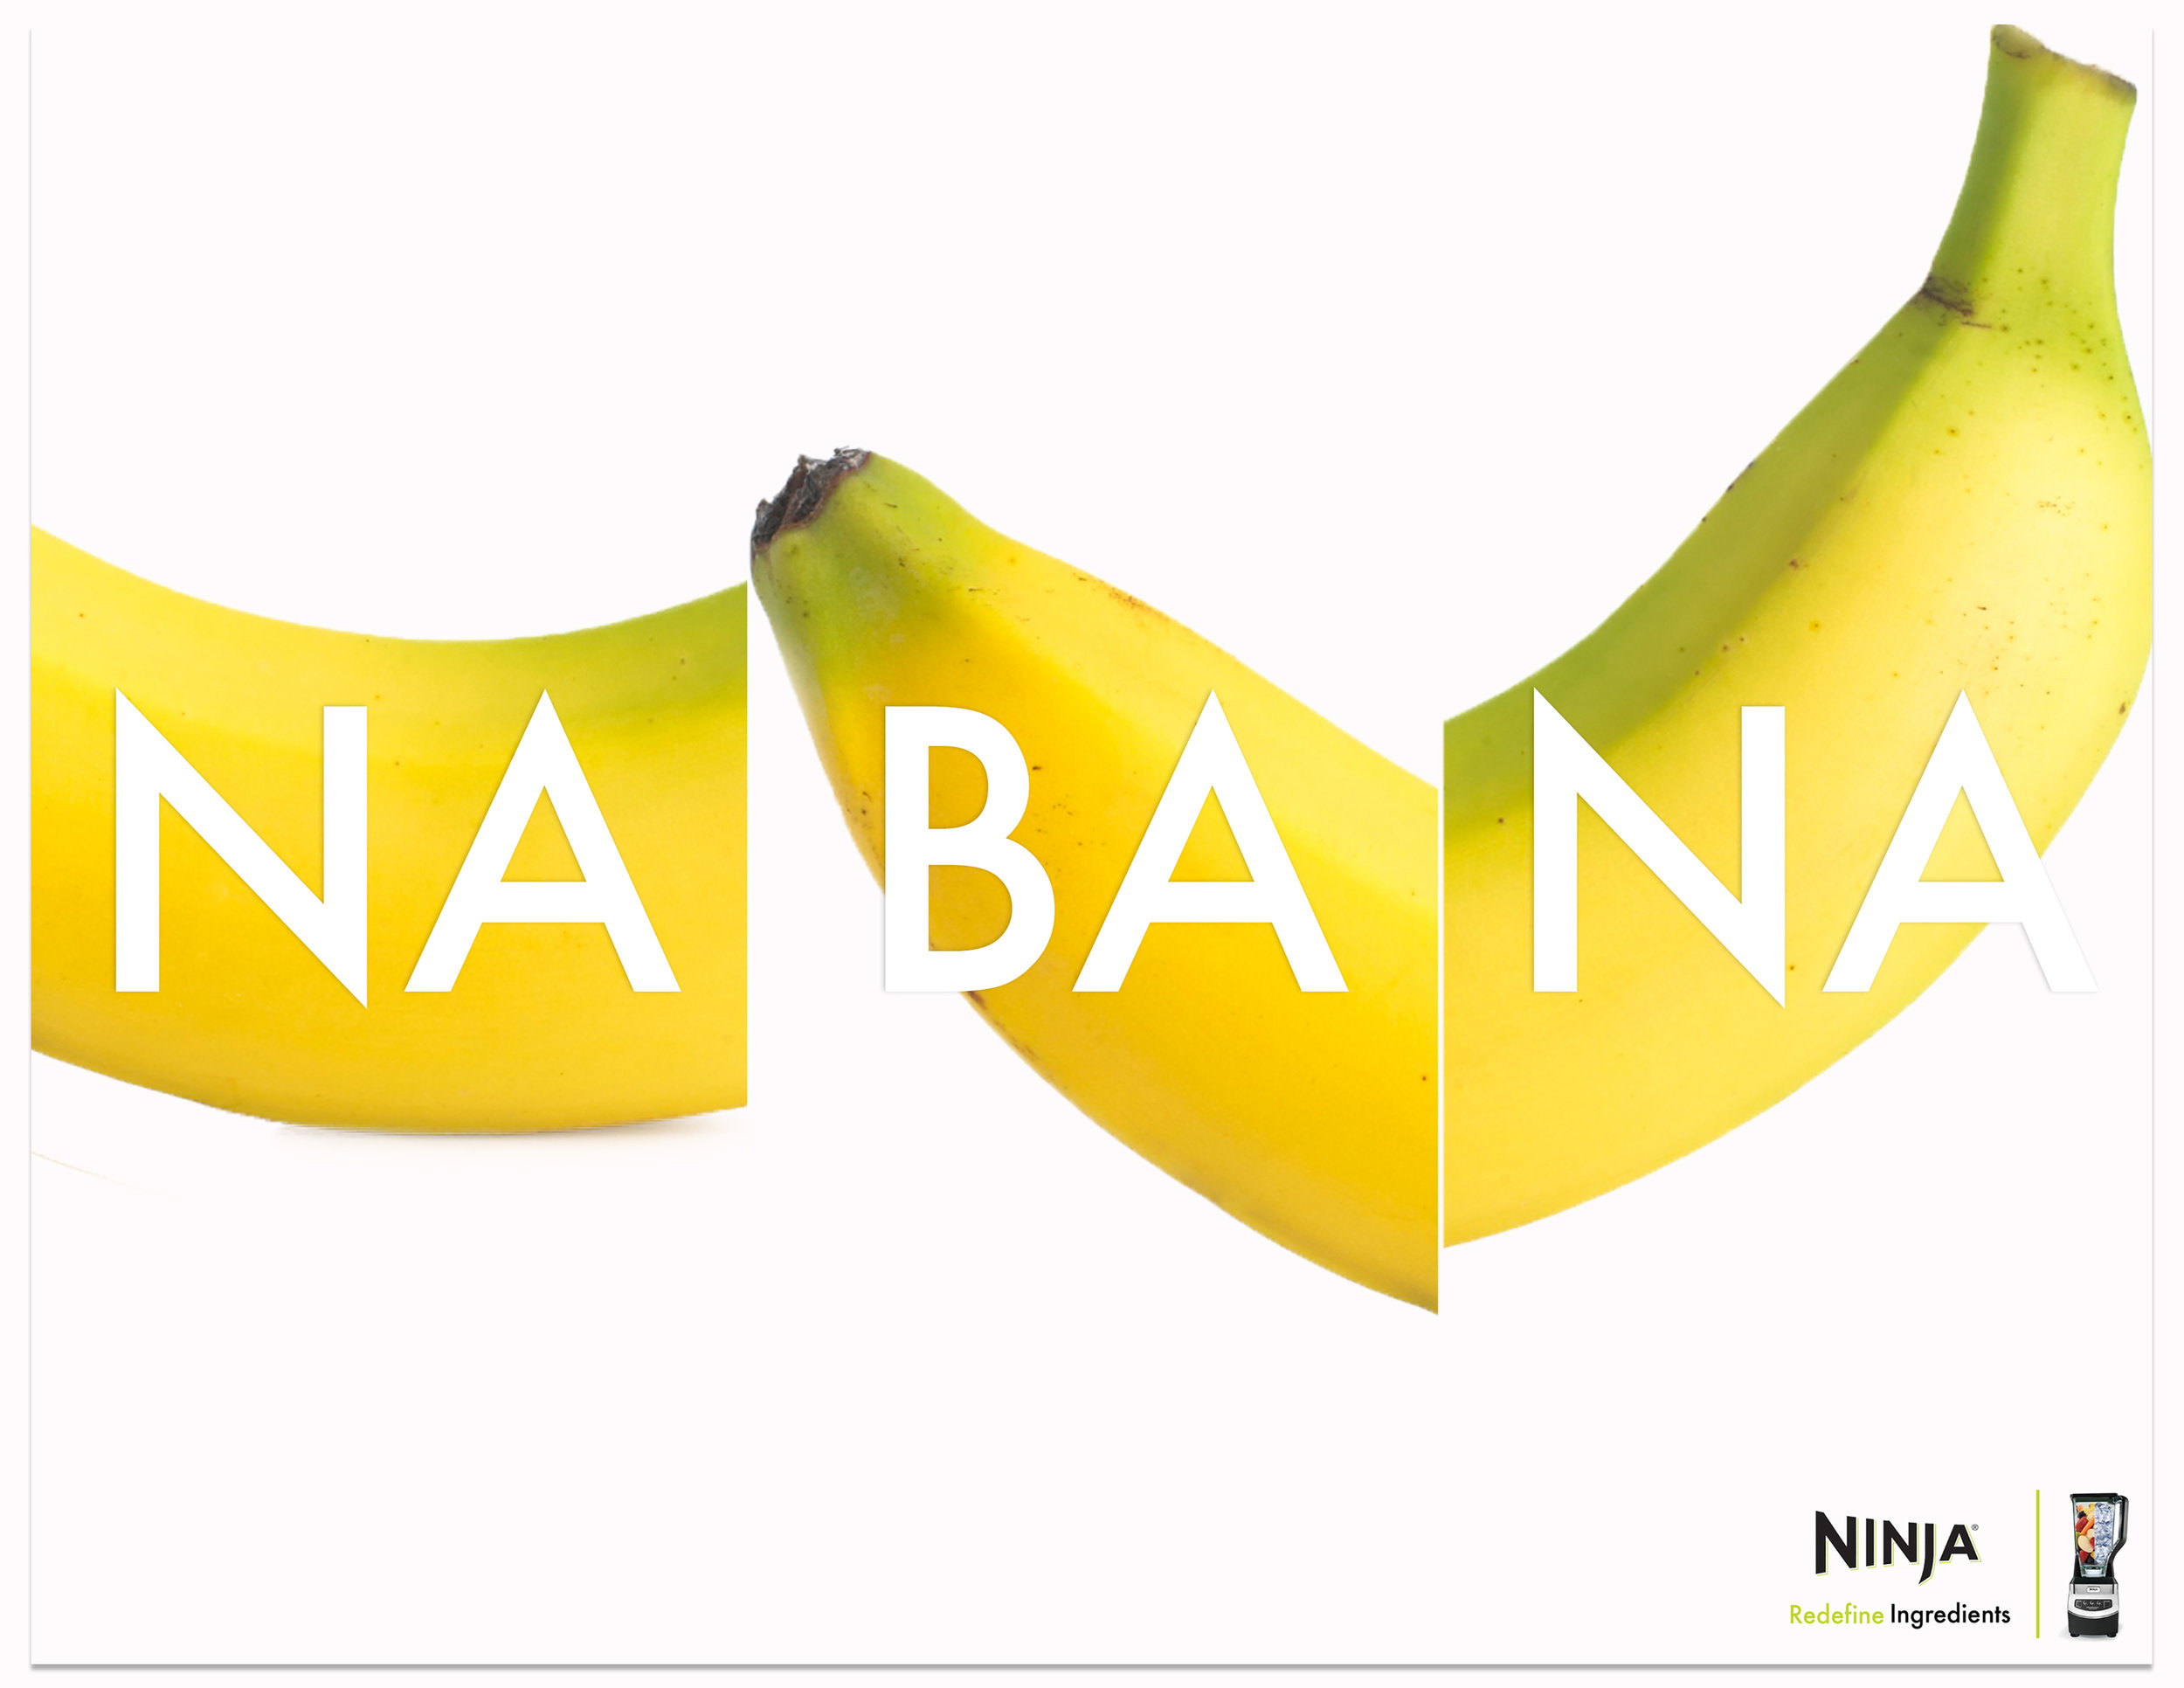 NINJA|Redefine|Bananaa|HD2.jpg